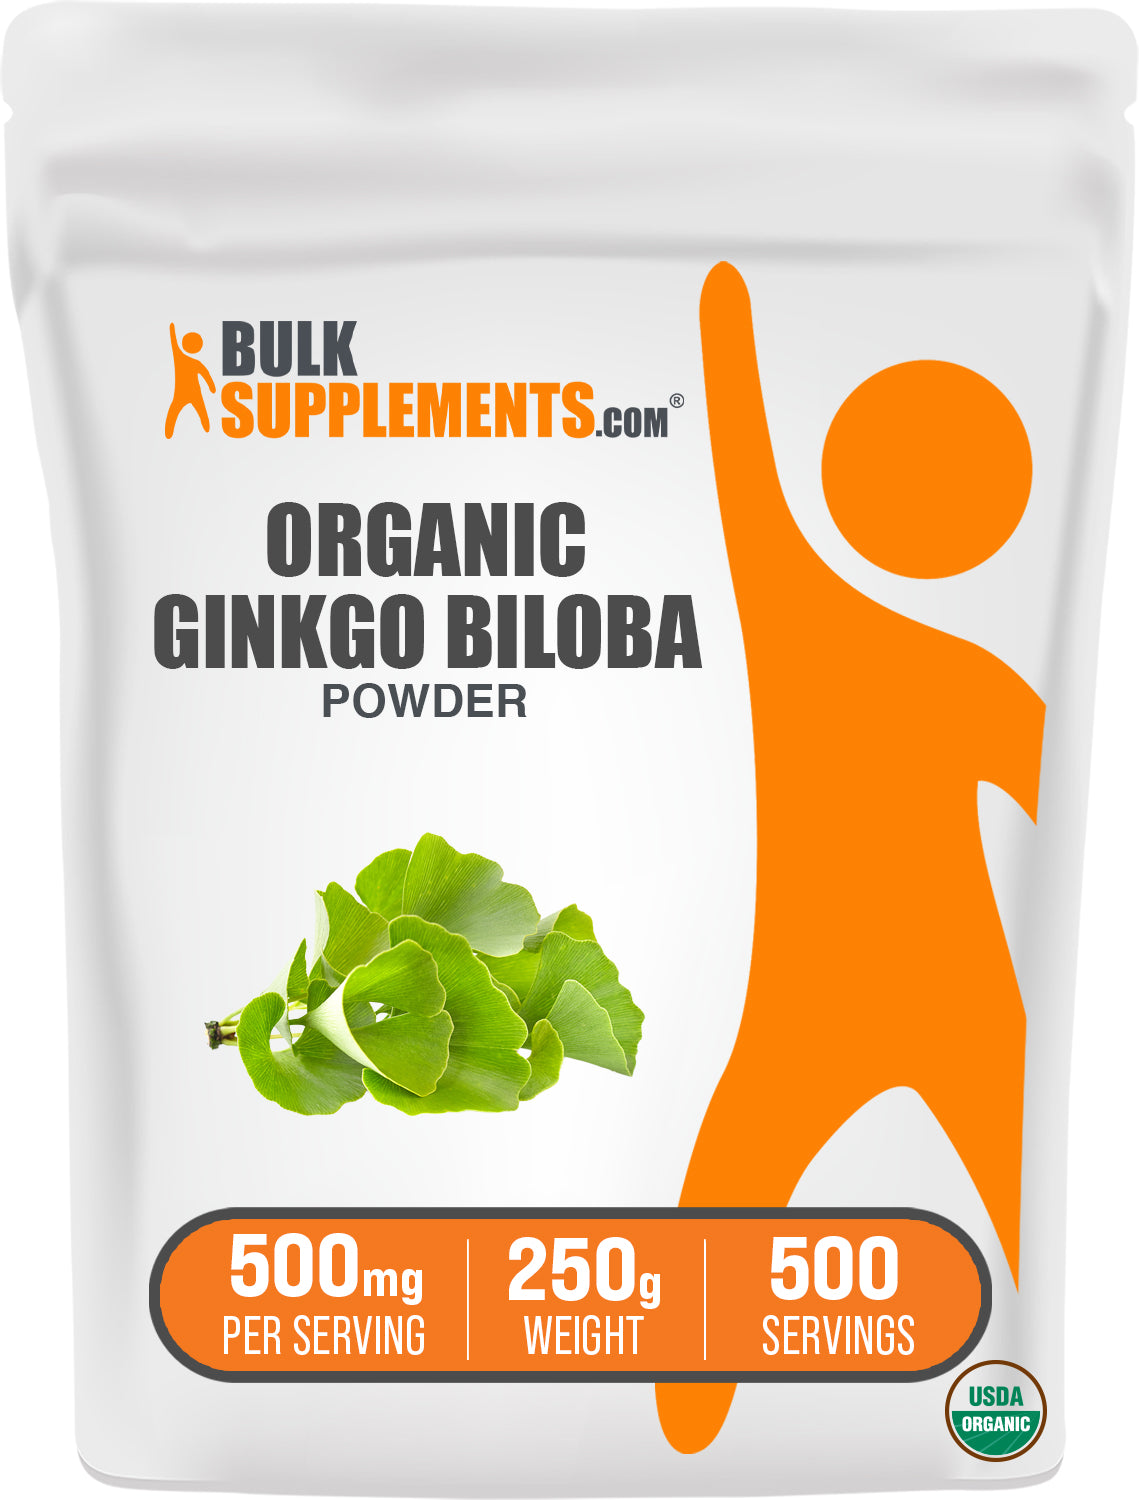 BulkSupplements.com Organic Ginkgo Biloba Powder 250g bag image